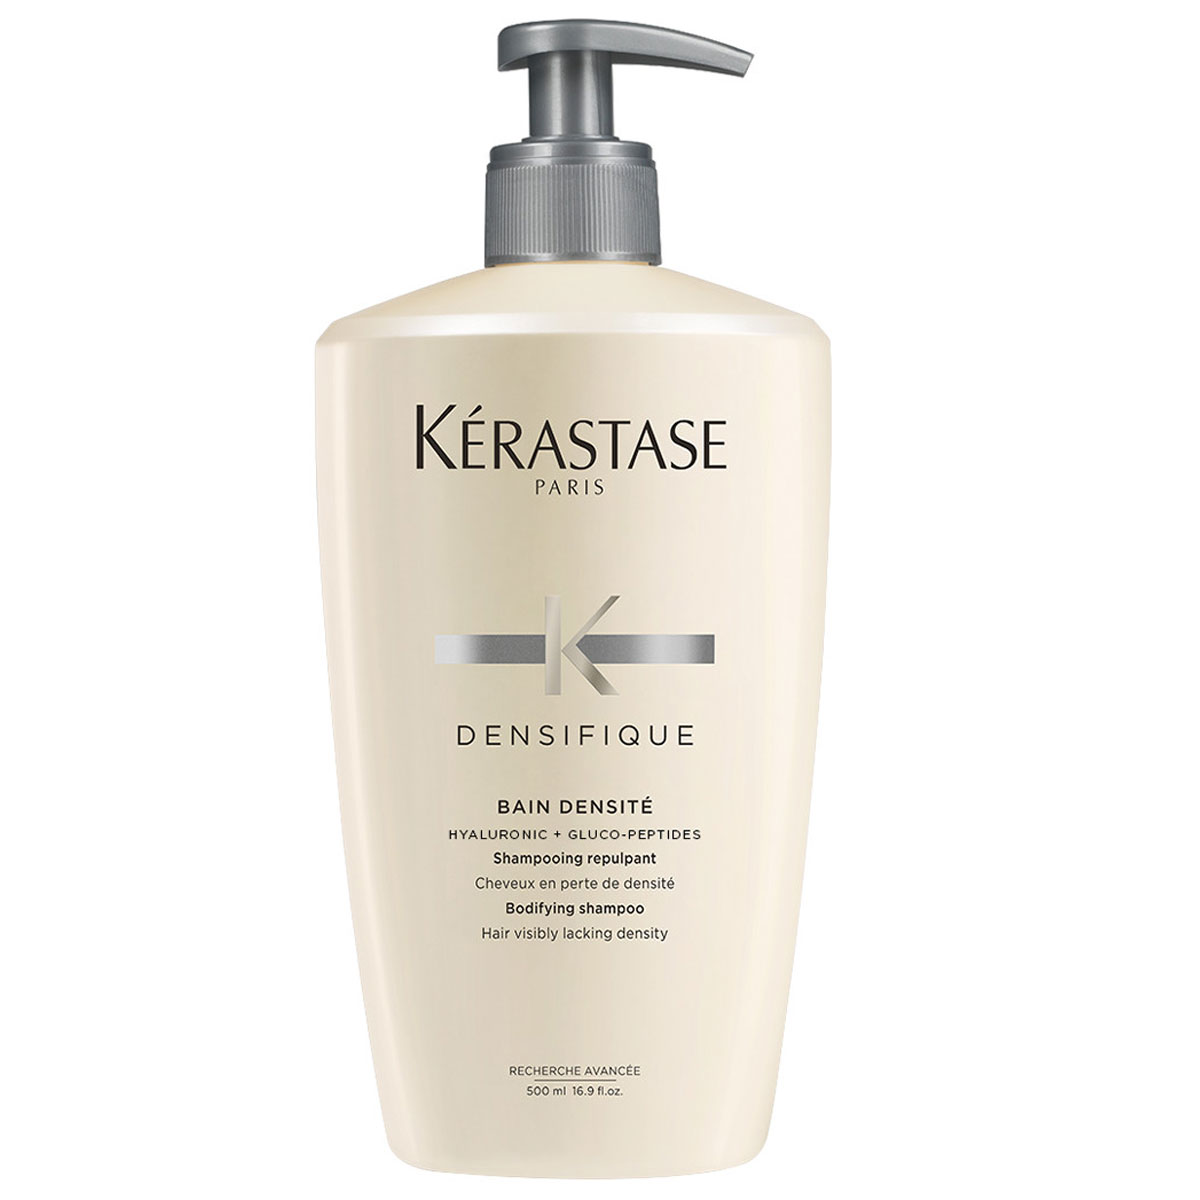 Kérastase - Densifique Bain Densité - Shampoo voor Voller en Dikker Haar - 500 ml